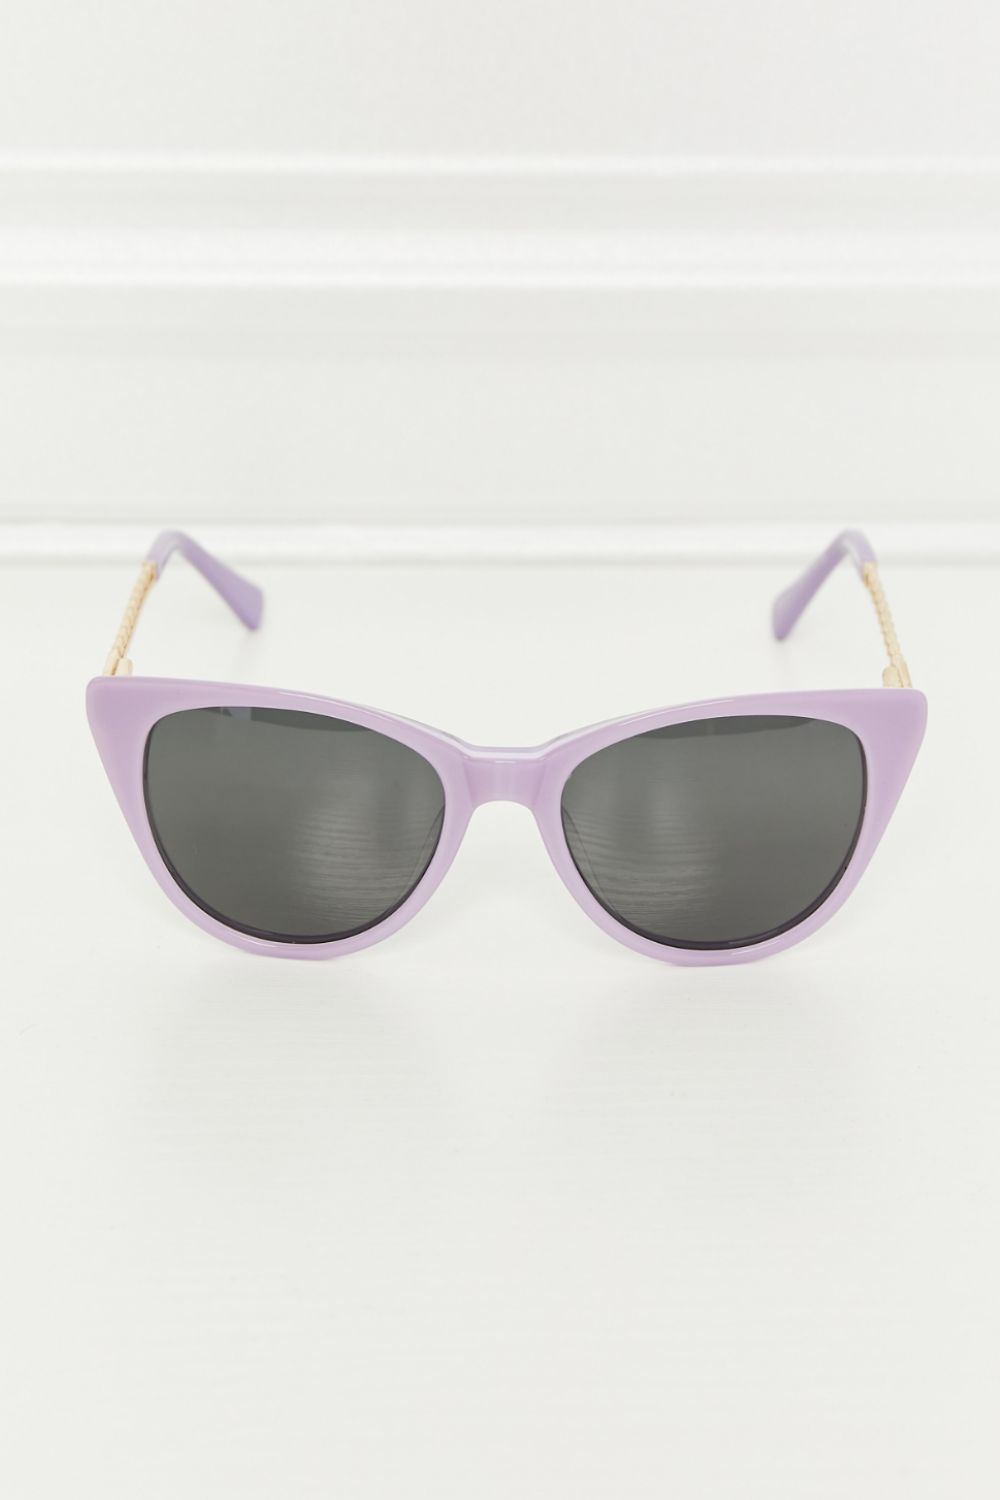 Cat-Eye Acetate Frame Sunglasses One Size Sunglasses by Vim&Vigor | Vim&Vigor Boutique